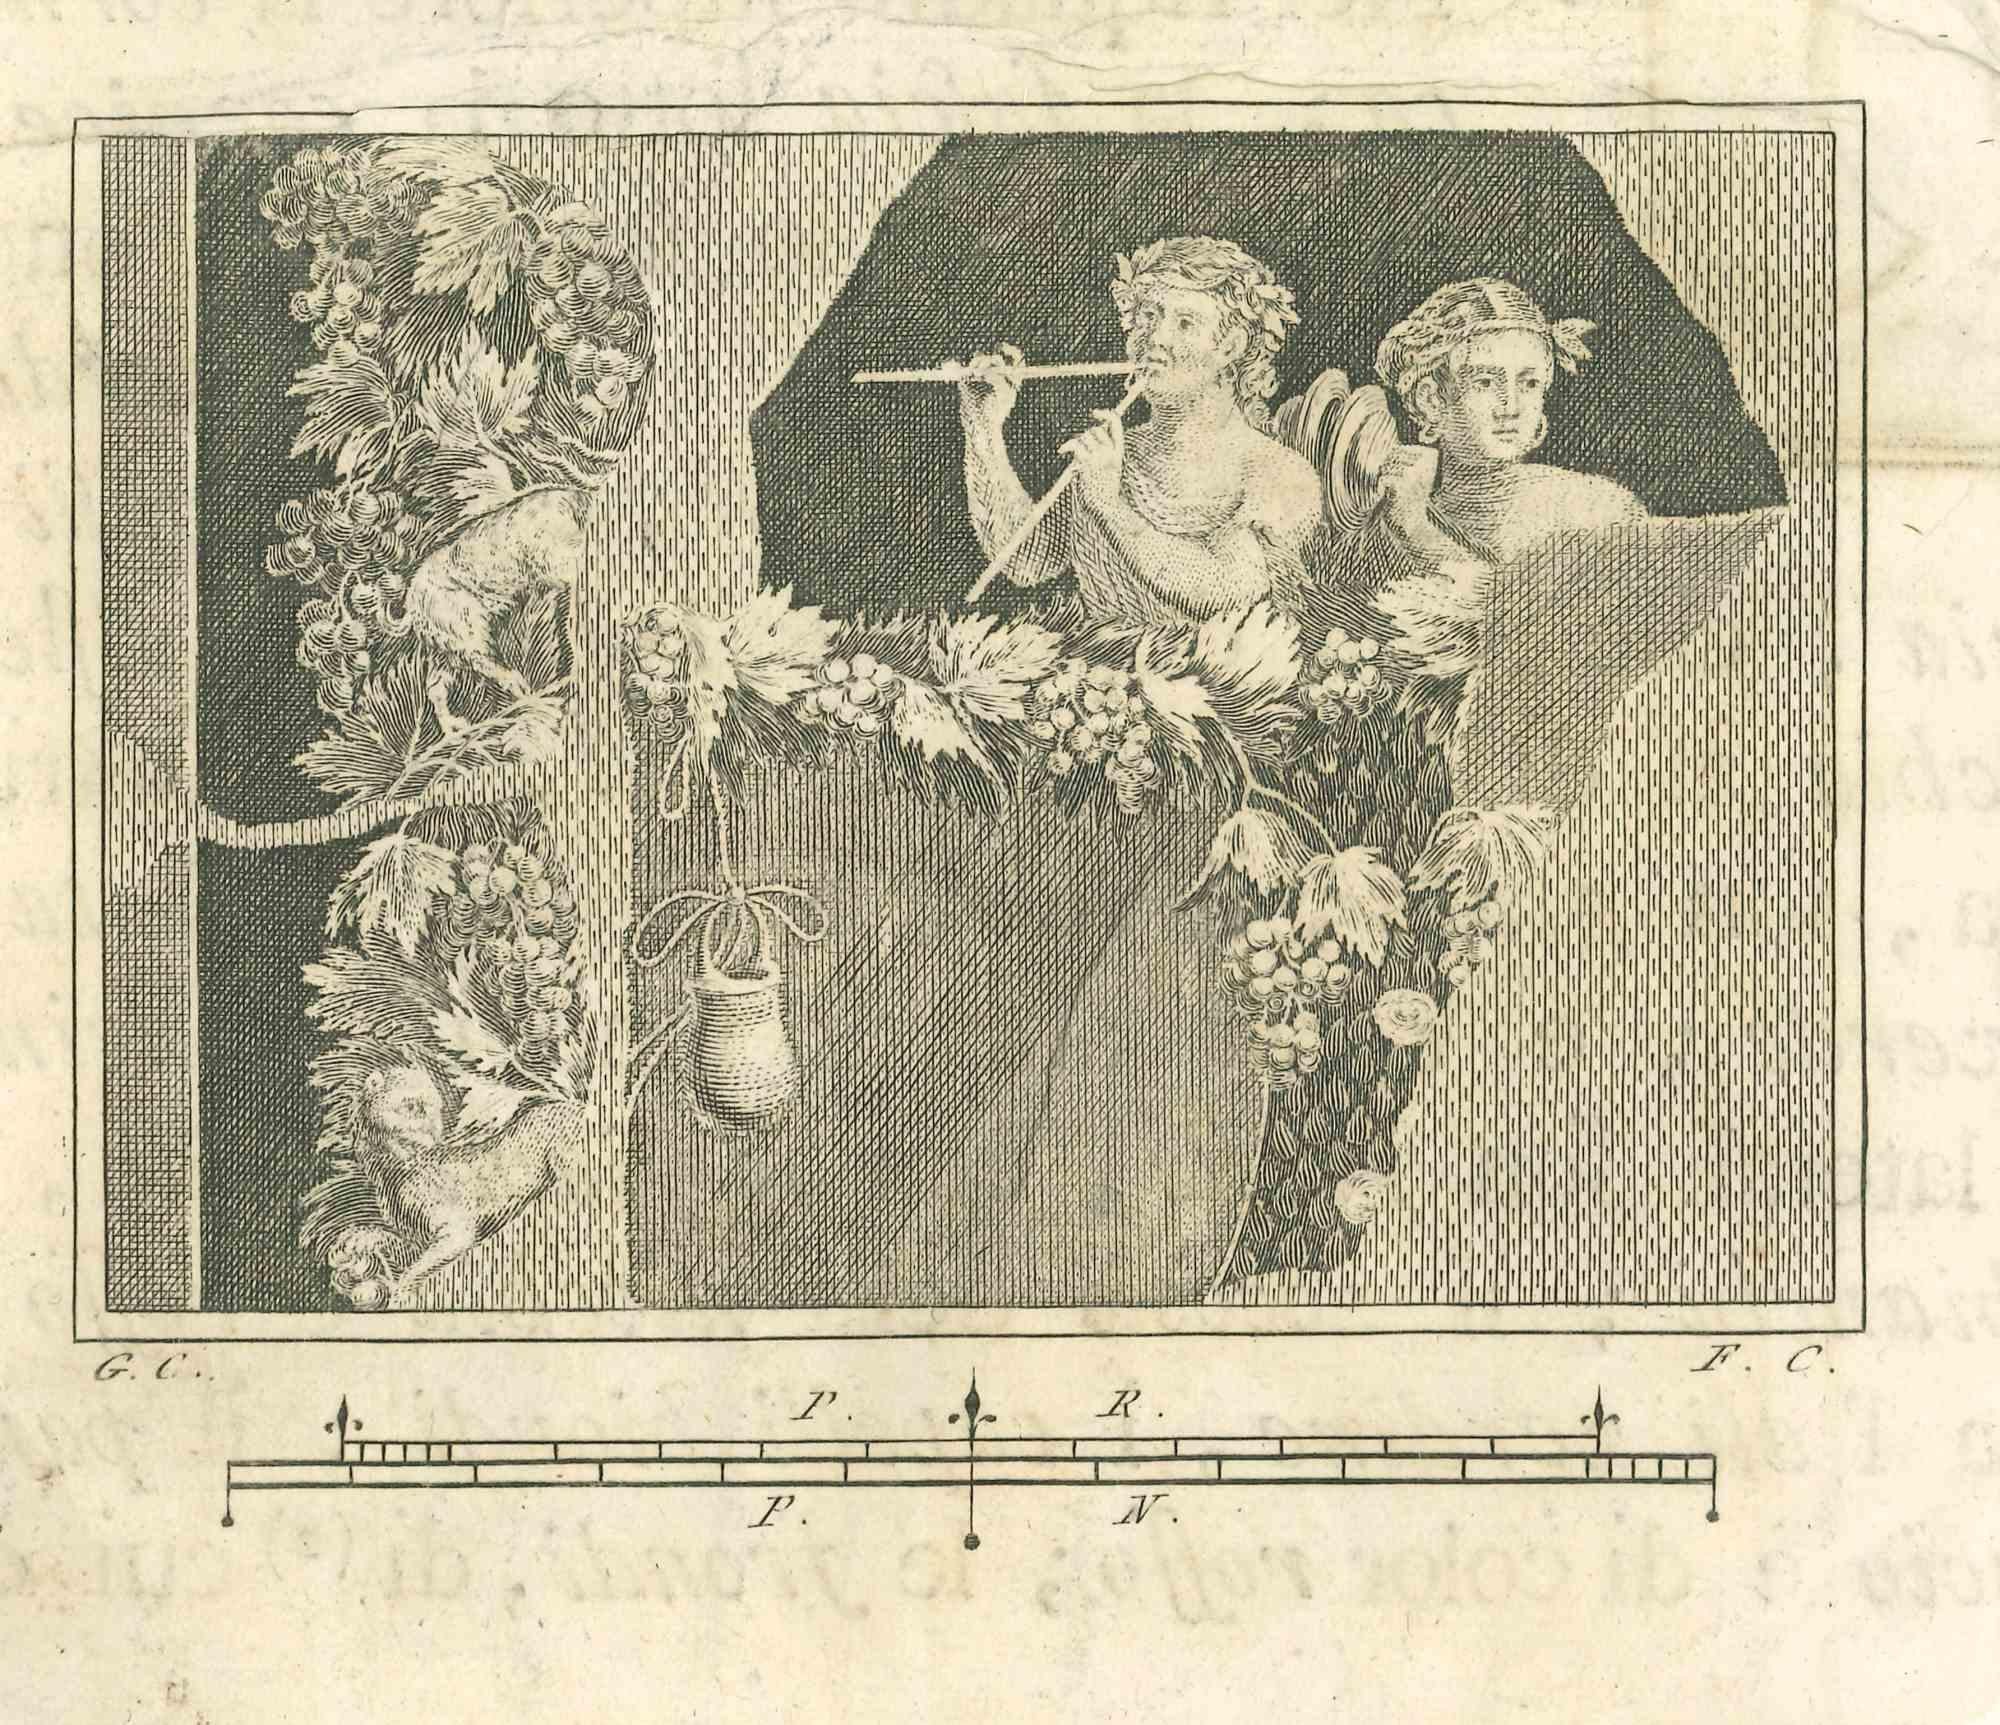 Figurative Print Ferdinando Campana - Fresco romain avec animaux mythologiques - eau-forte de F. Campana - 18ème siècle